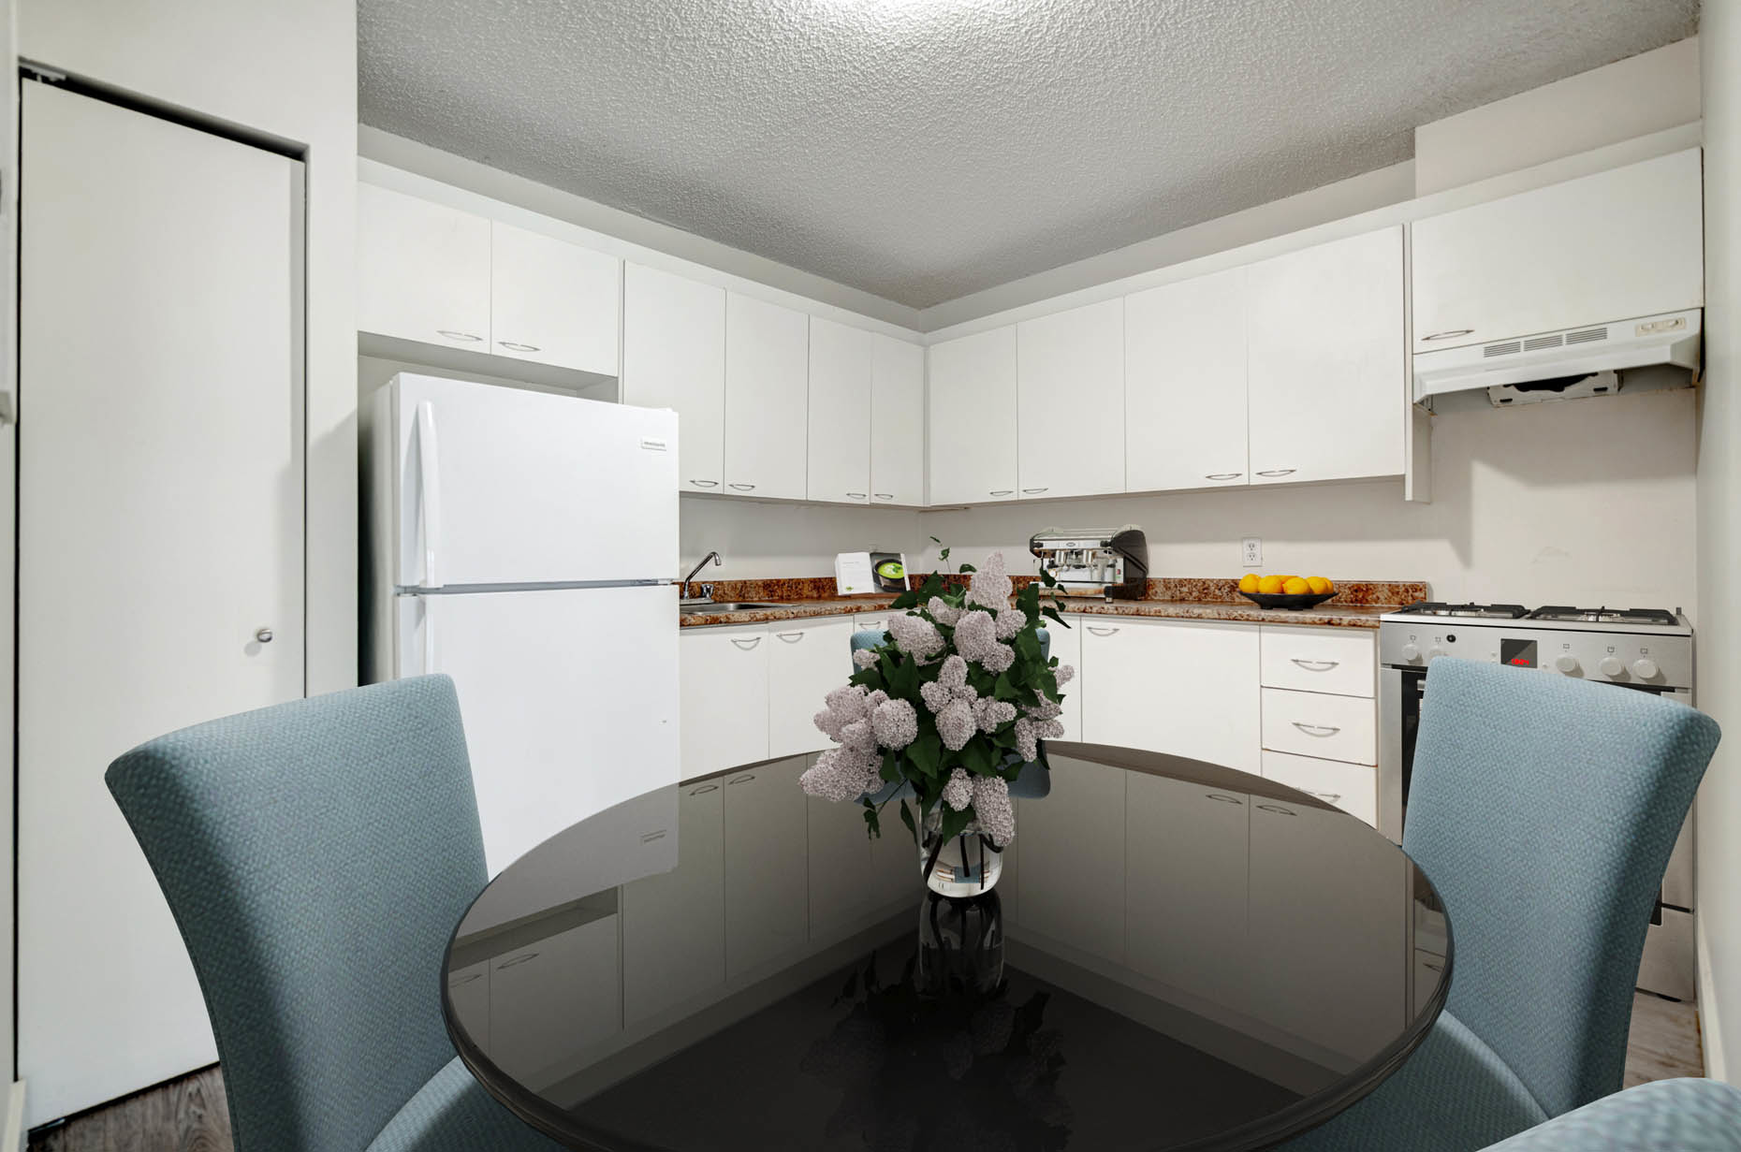 1 bedroom Apartments for rent in Ville St-Laurent - Bois-Franc at Complexe Deguire - Photo 06 - RentQuebecApartments – L407181